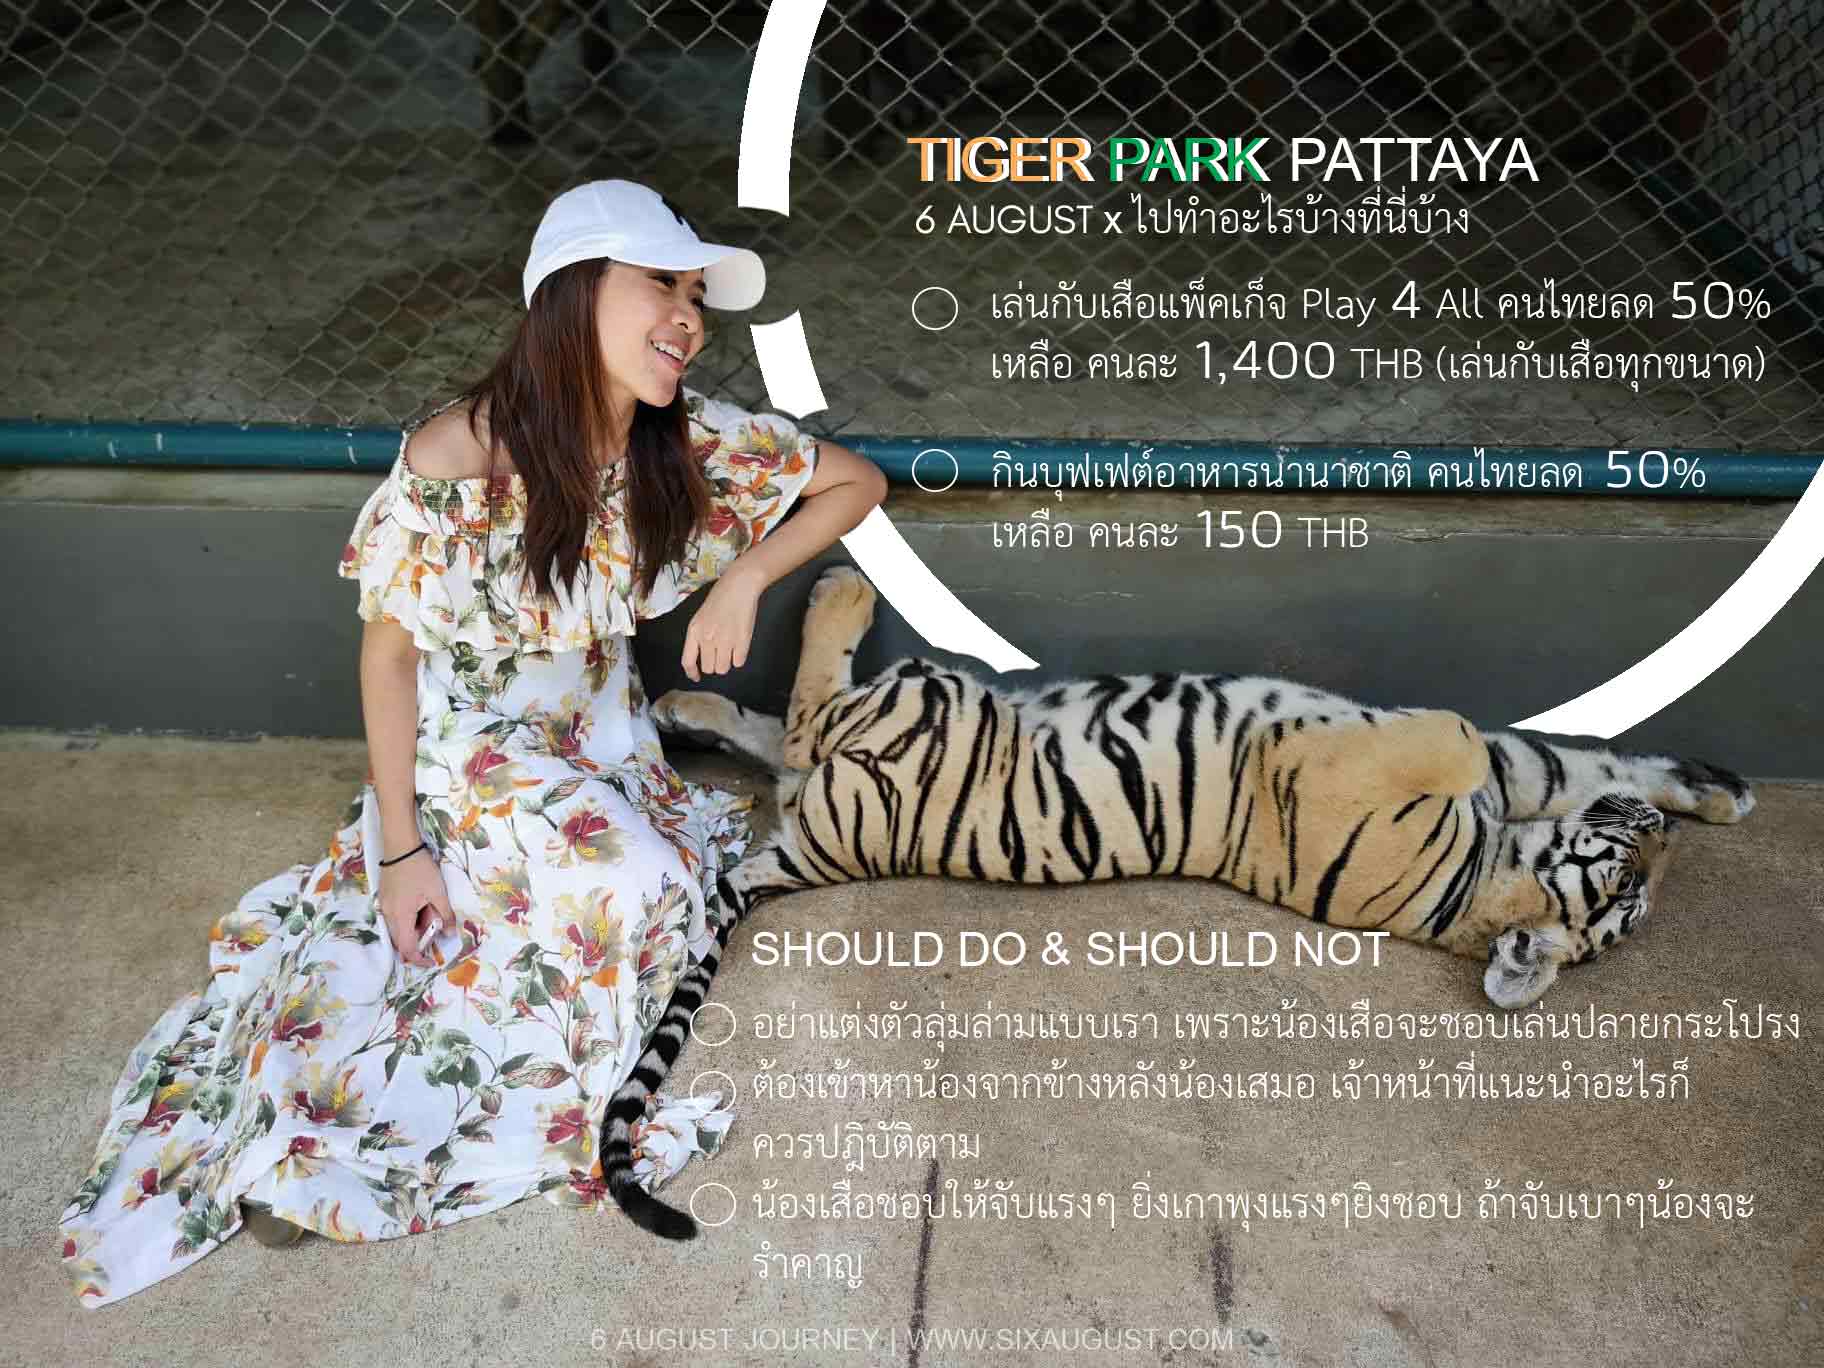 tiger park pattaya ราคา ที่เราใช้บริการ